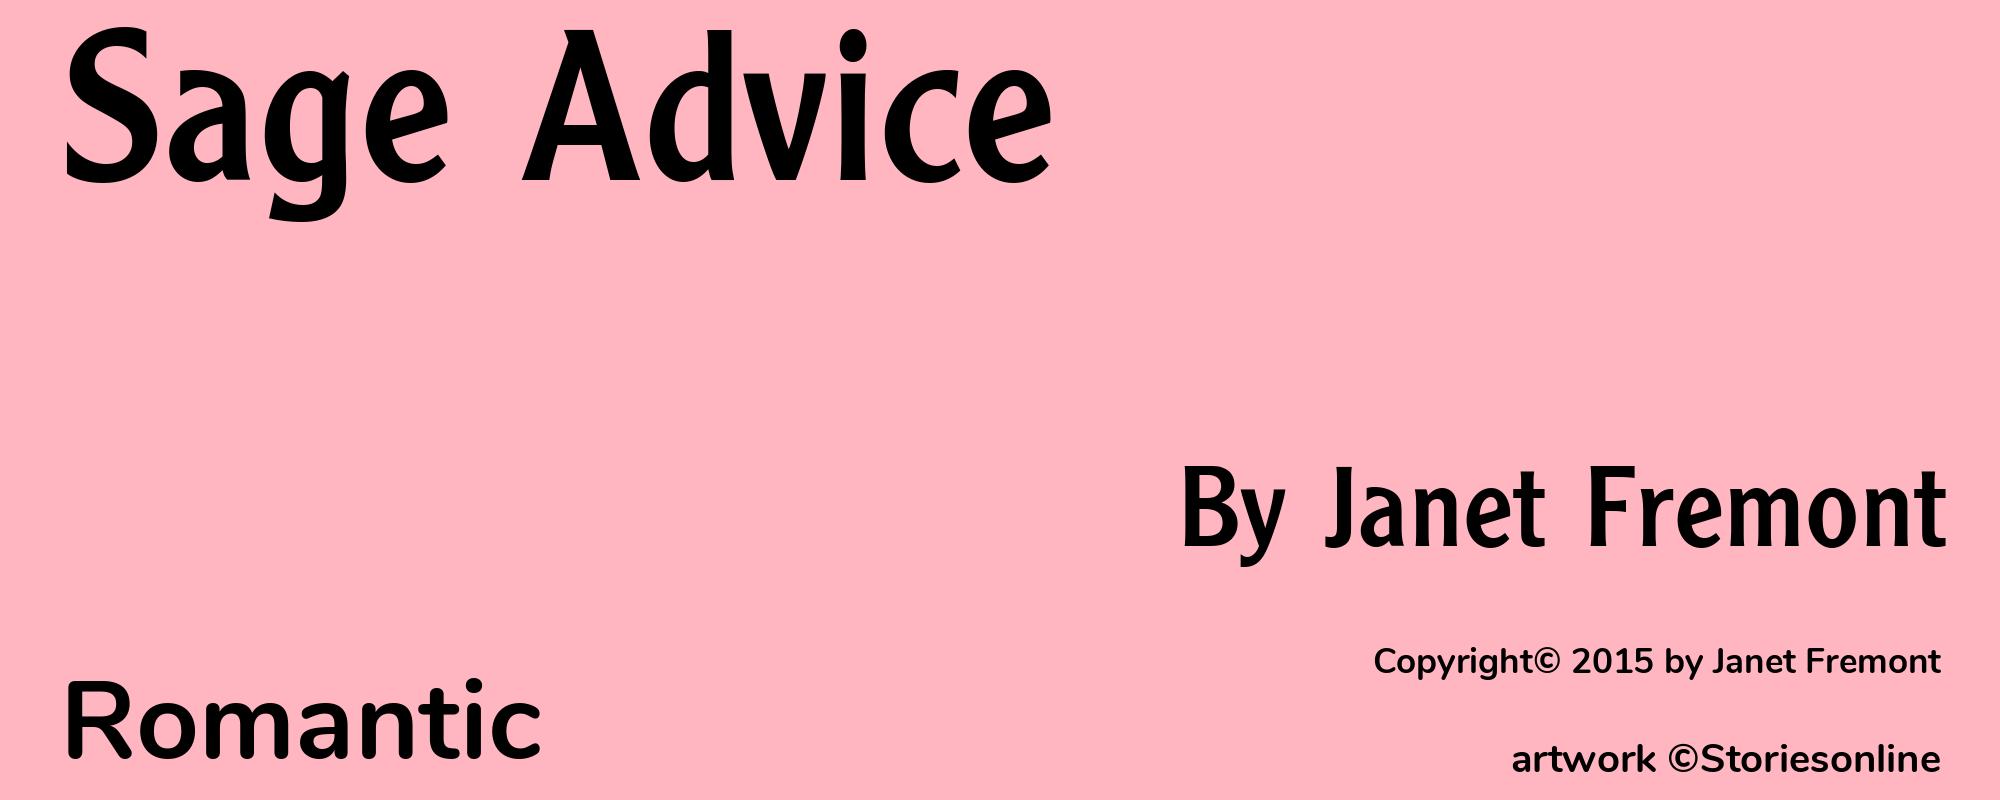 Sage Advice - Cover